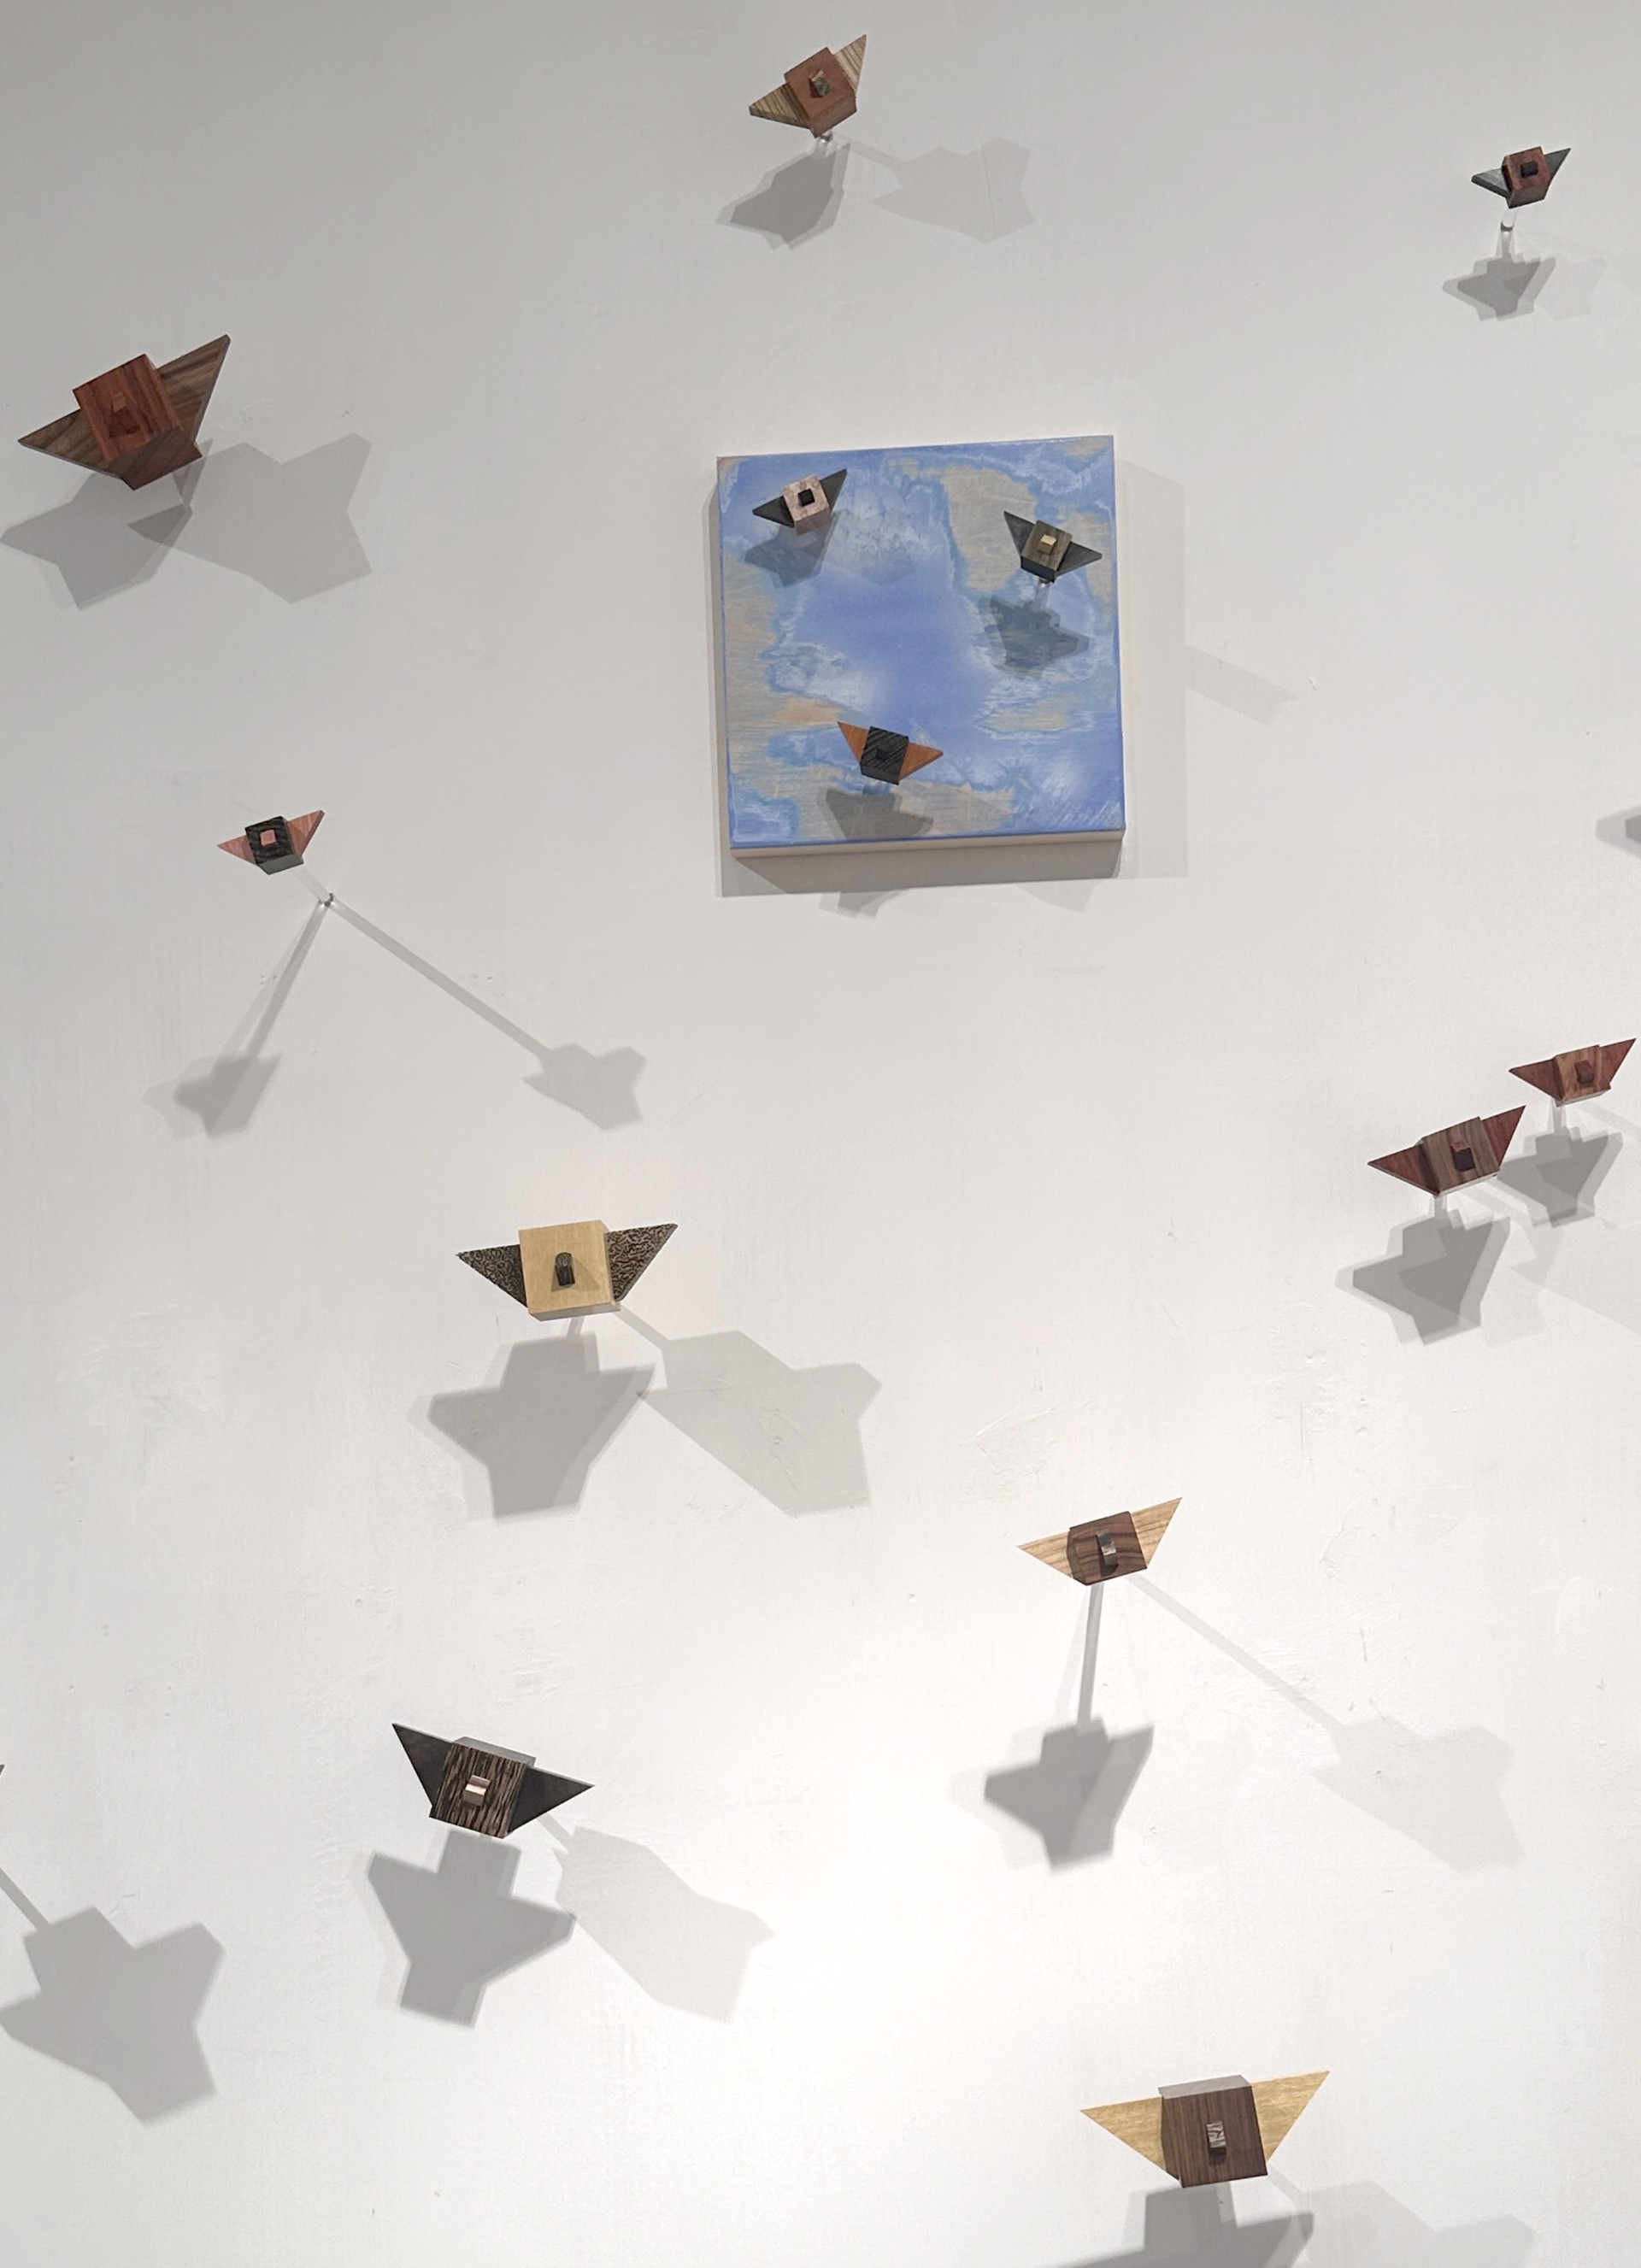 The Flock (Master bedroom installation of 40 birds) by Brendan Flores